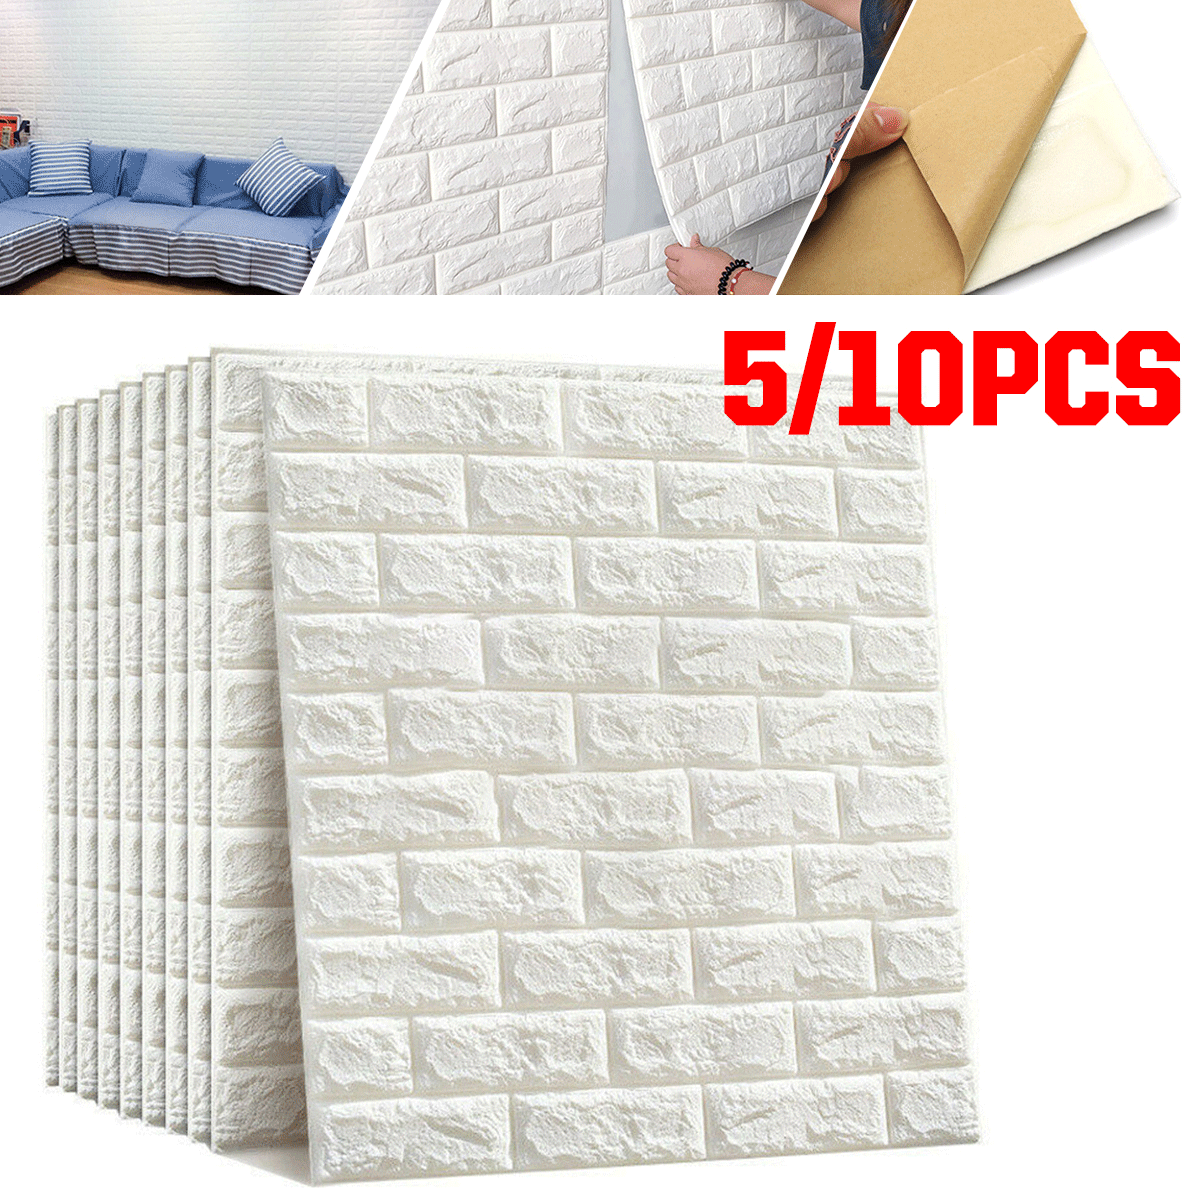 6m Retro 3D Brick Wallpaper Waterproof PVC Self Adhesive Bedroom Wall Stickers 